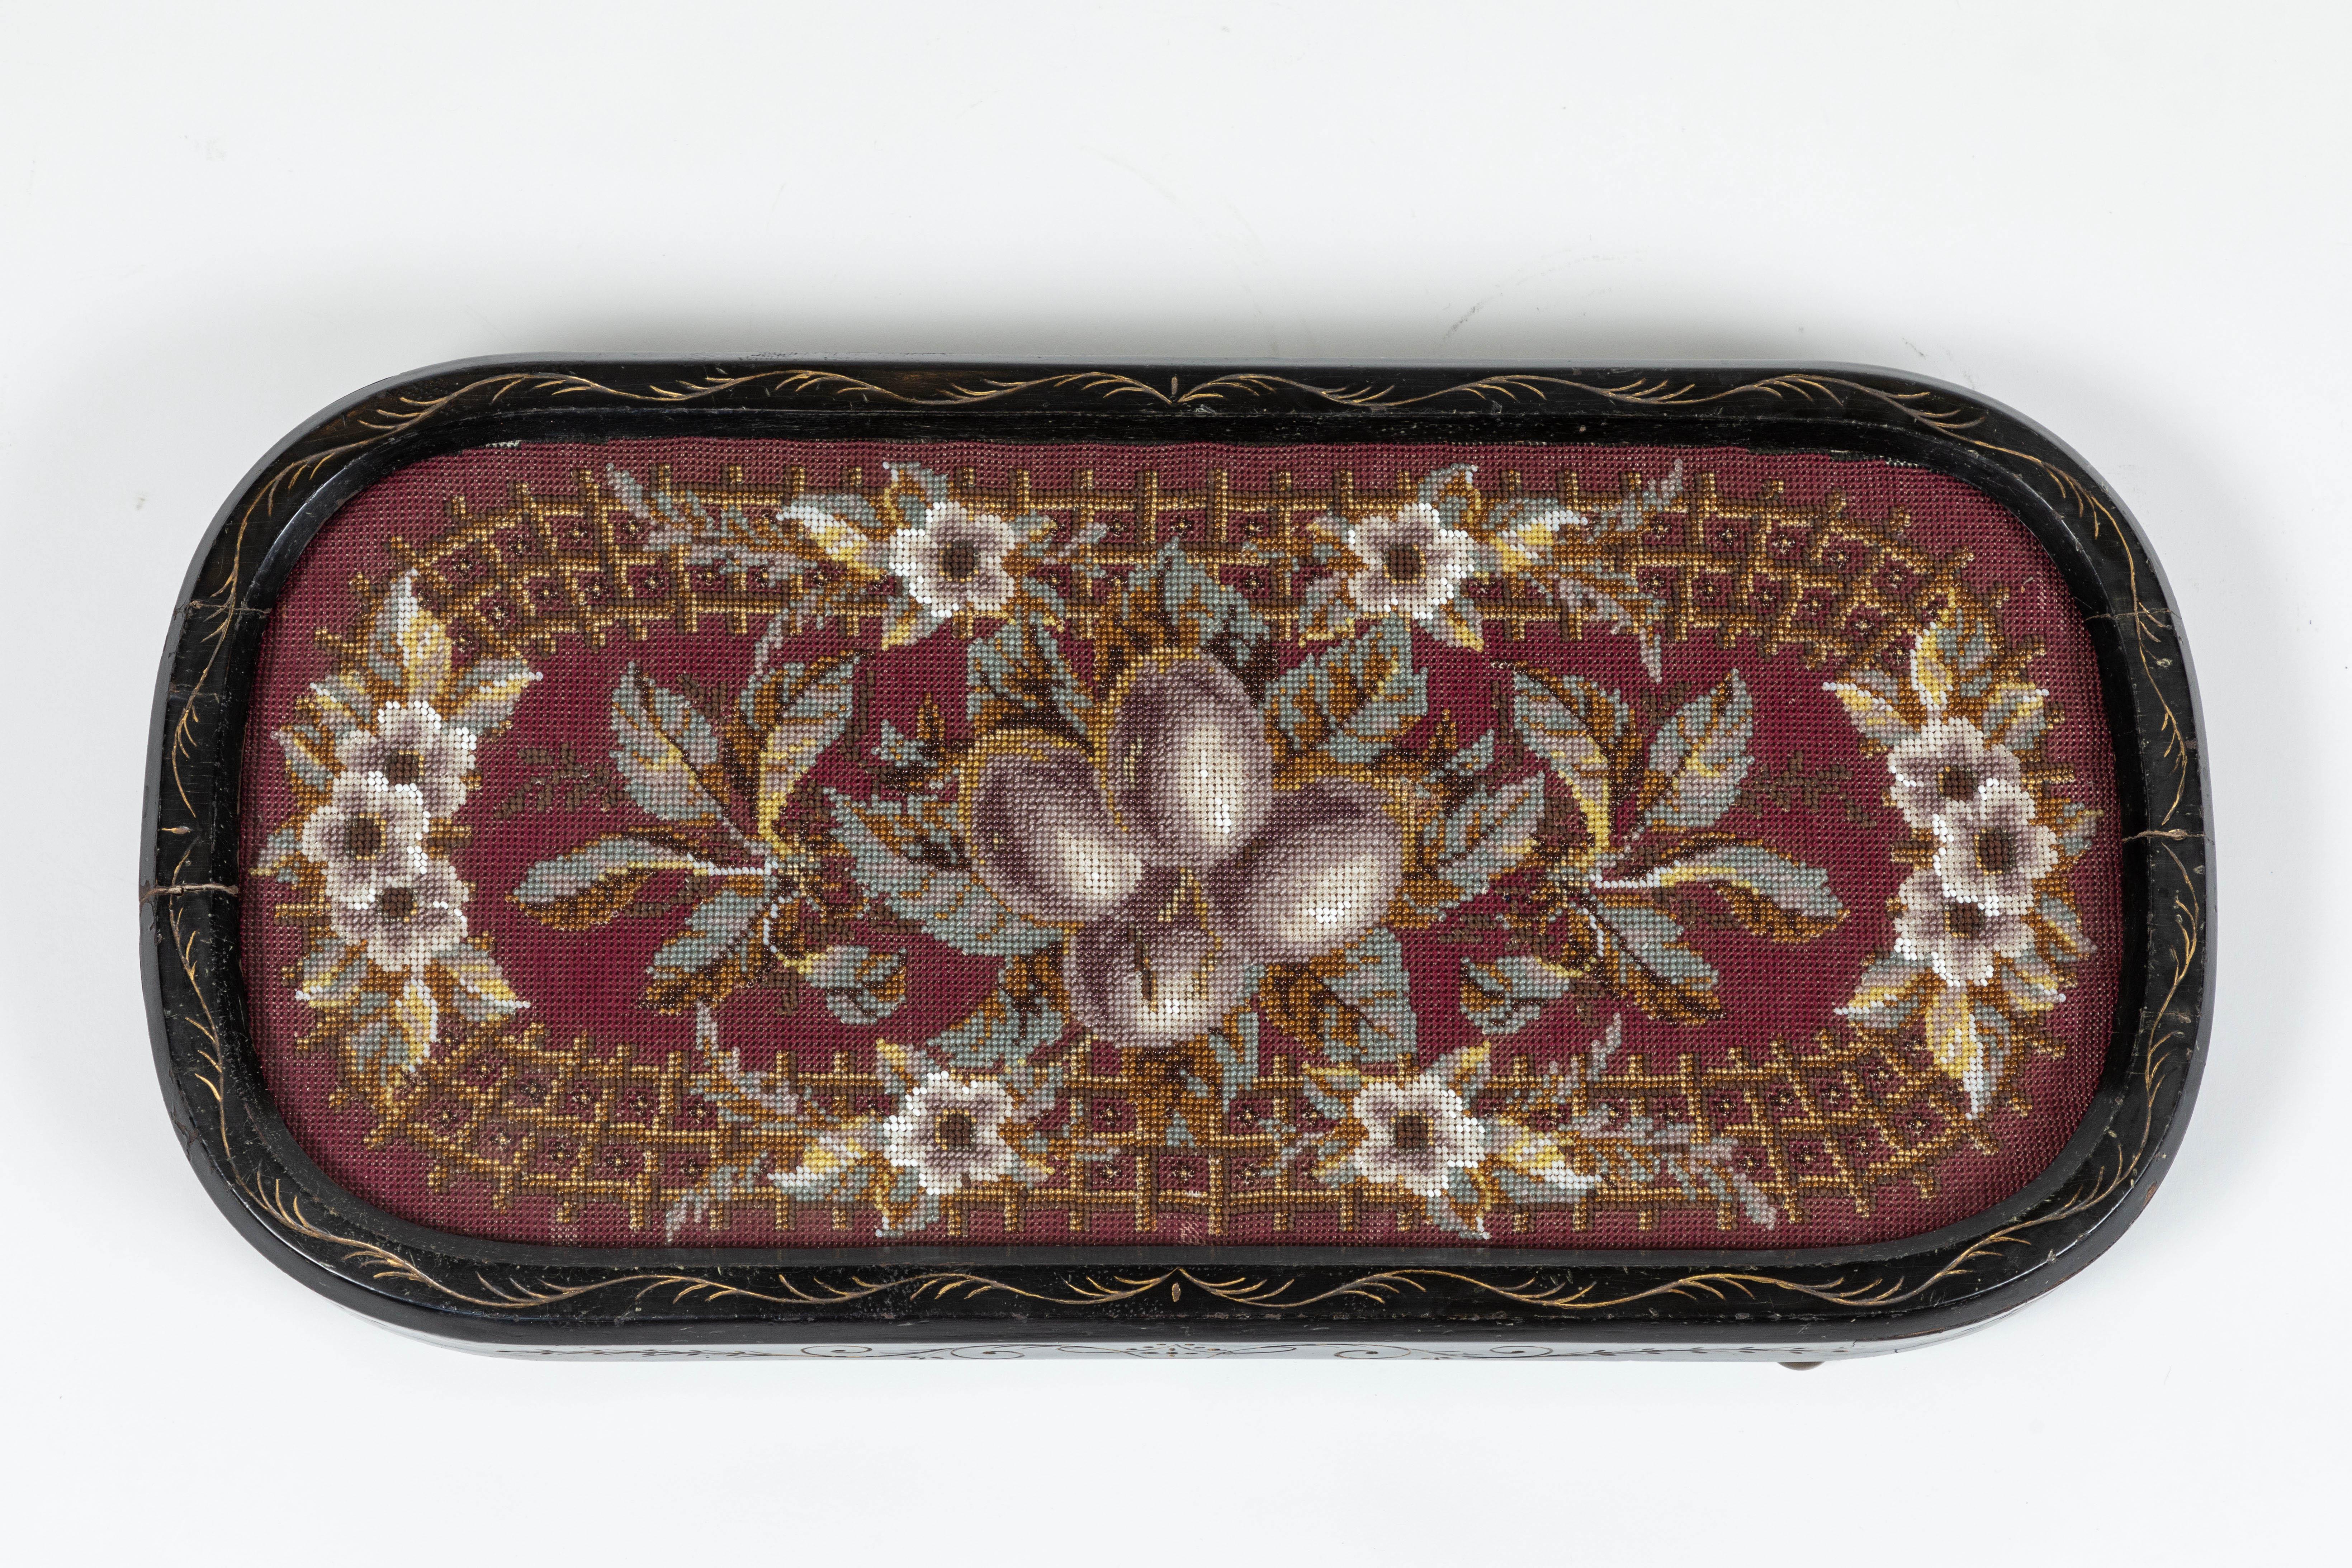 Beads Antique Eastlake Wood Tray, circa 1850-1880